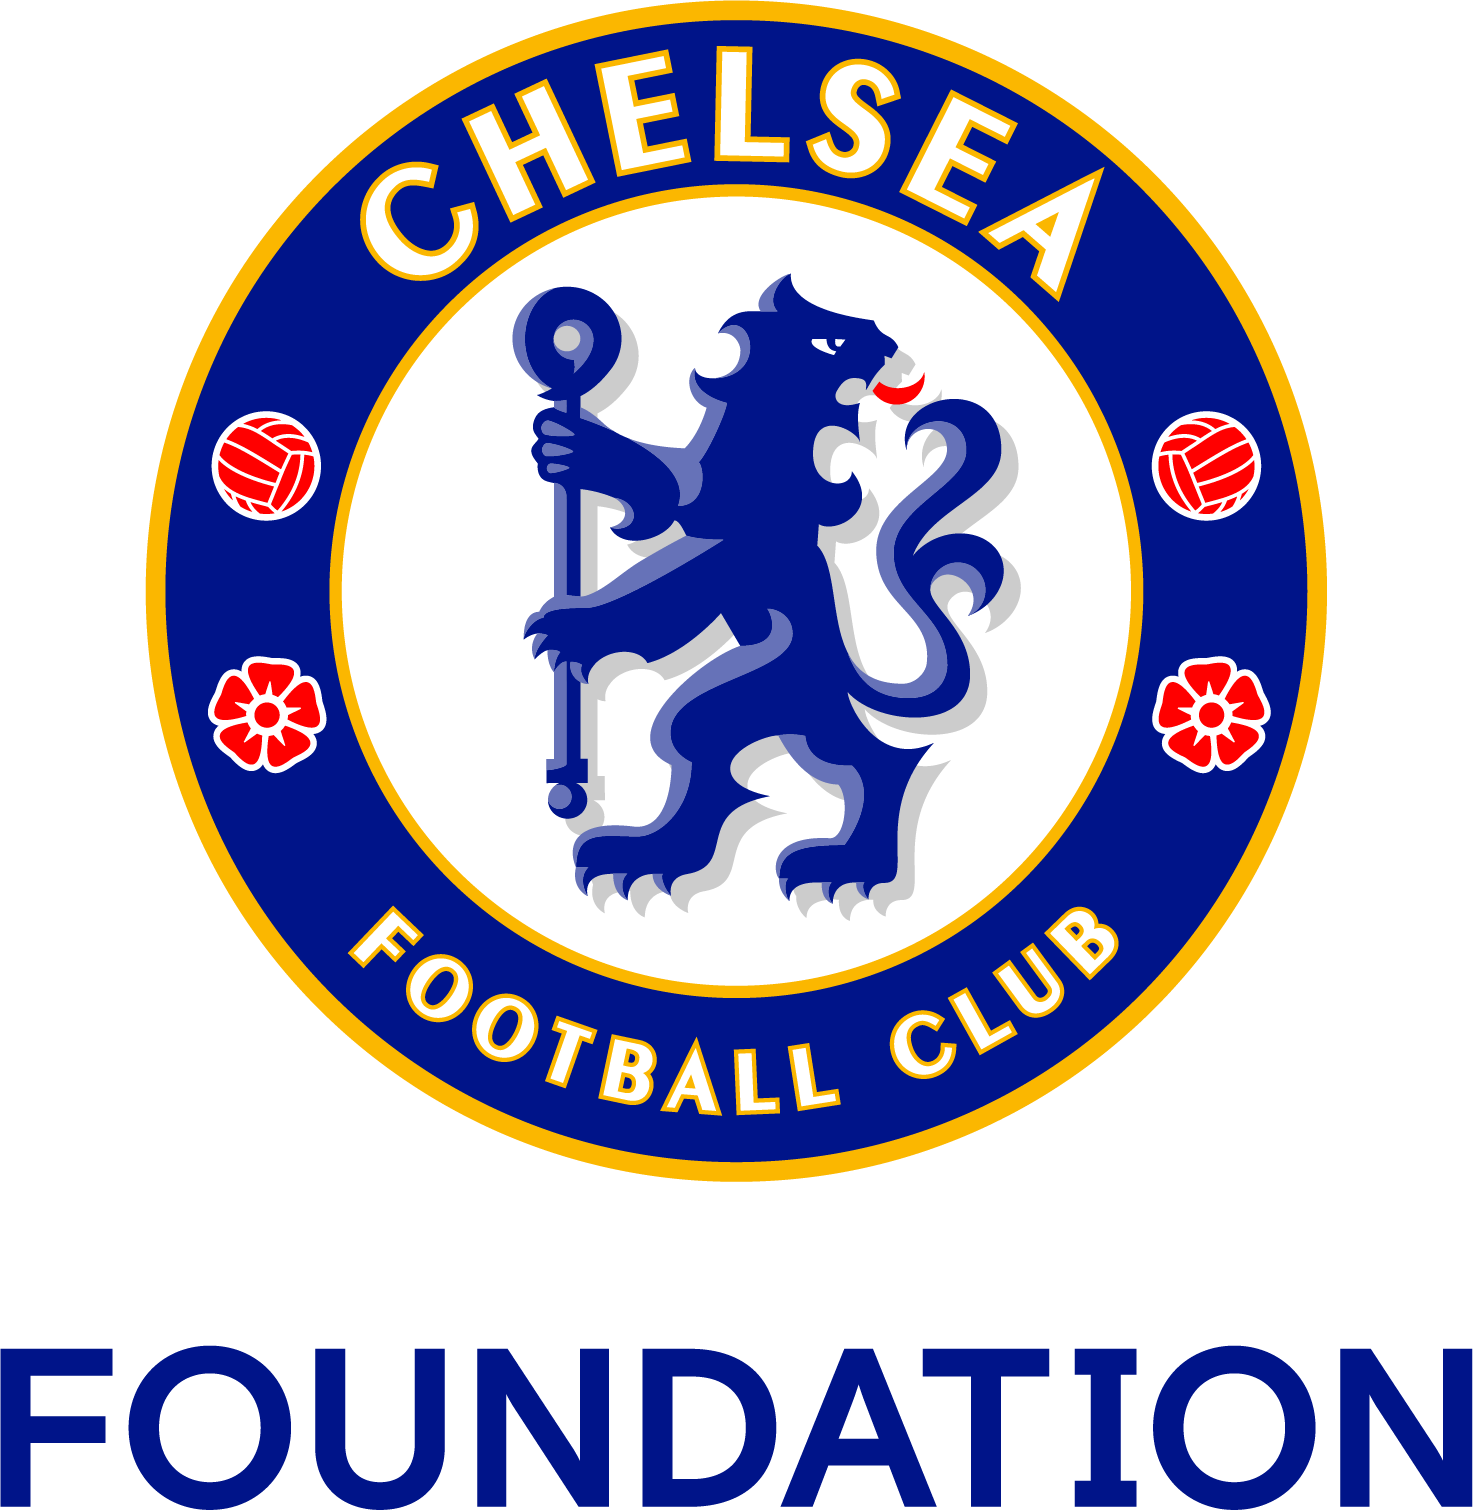 Chelsea Foundation - Crystal palace